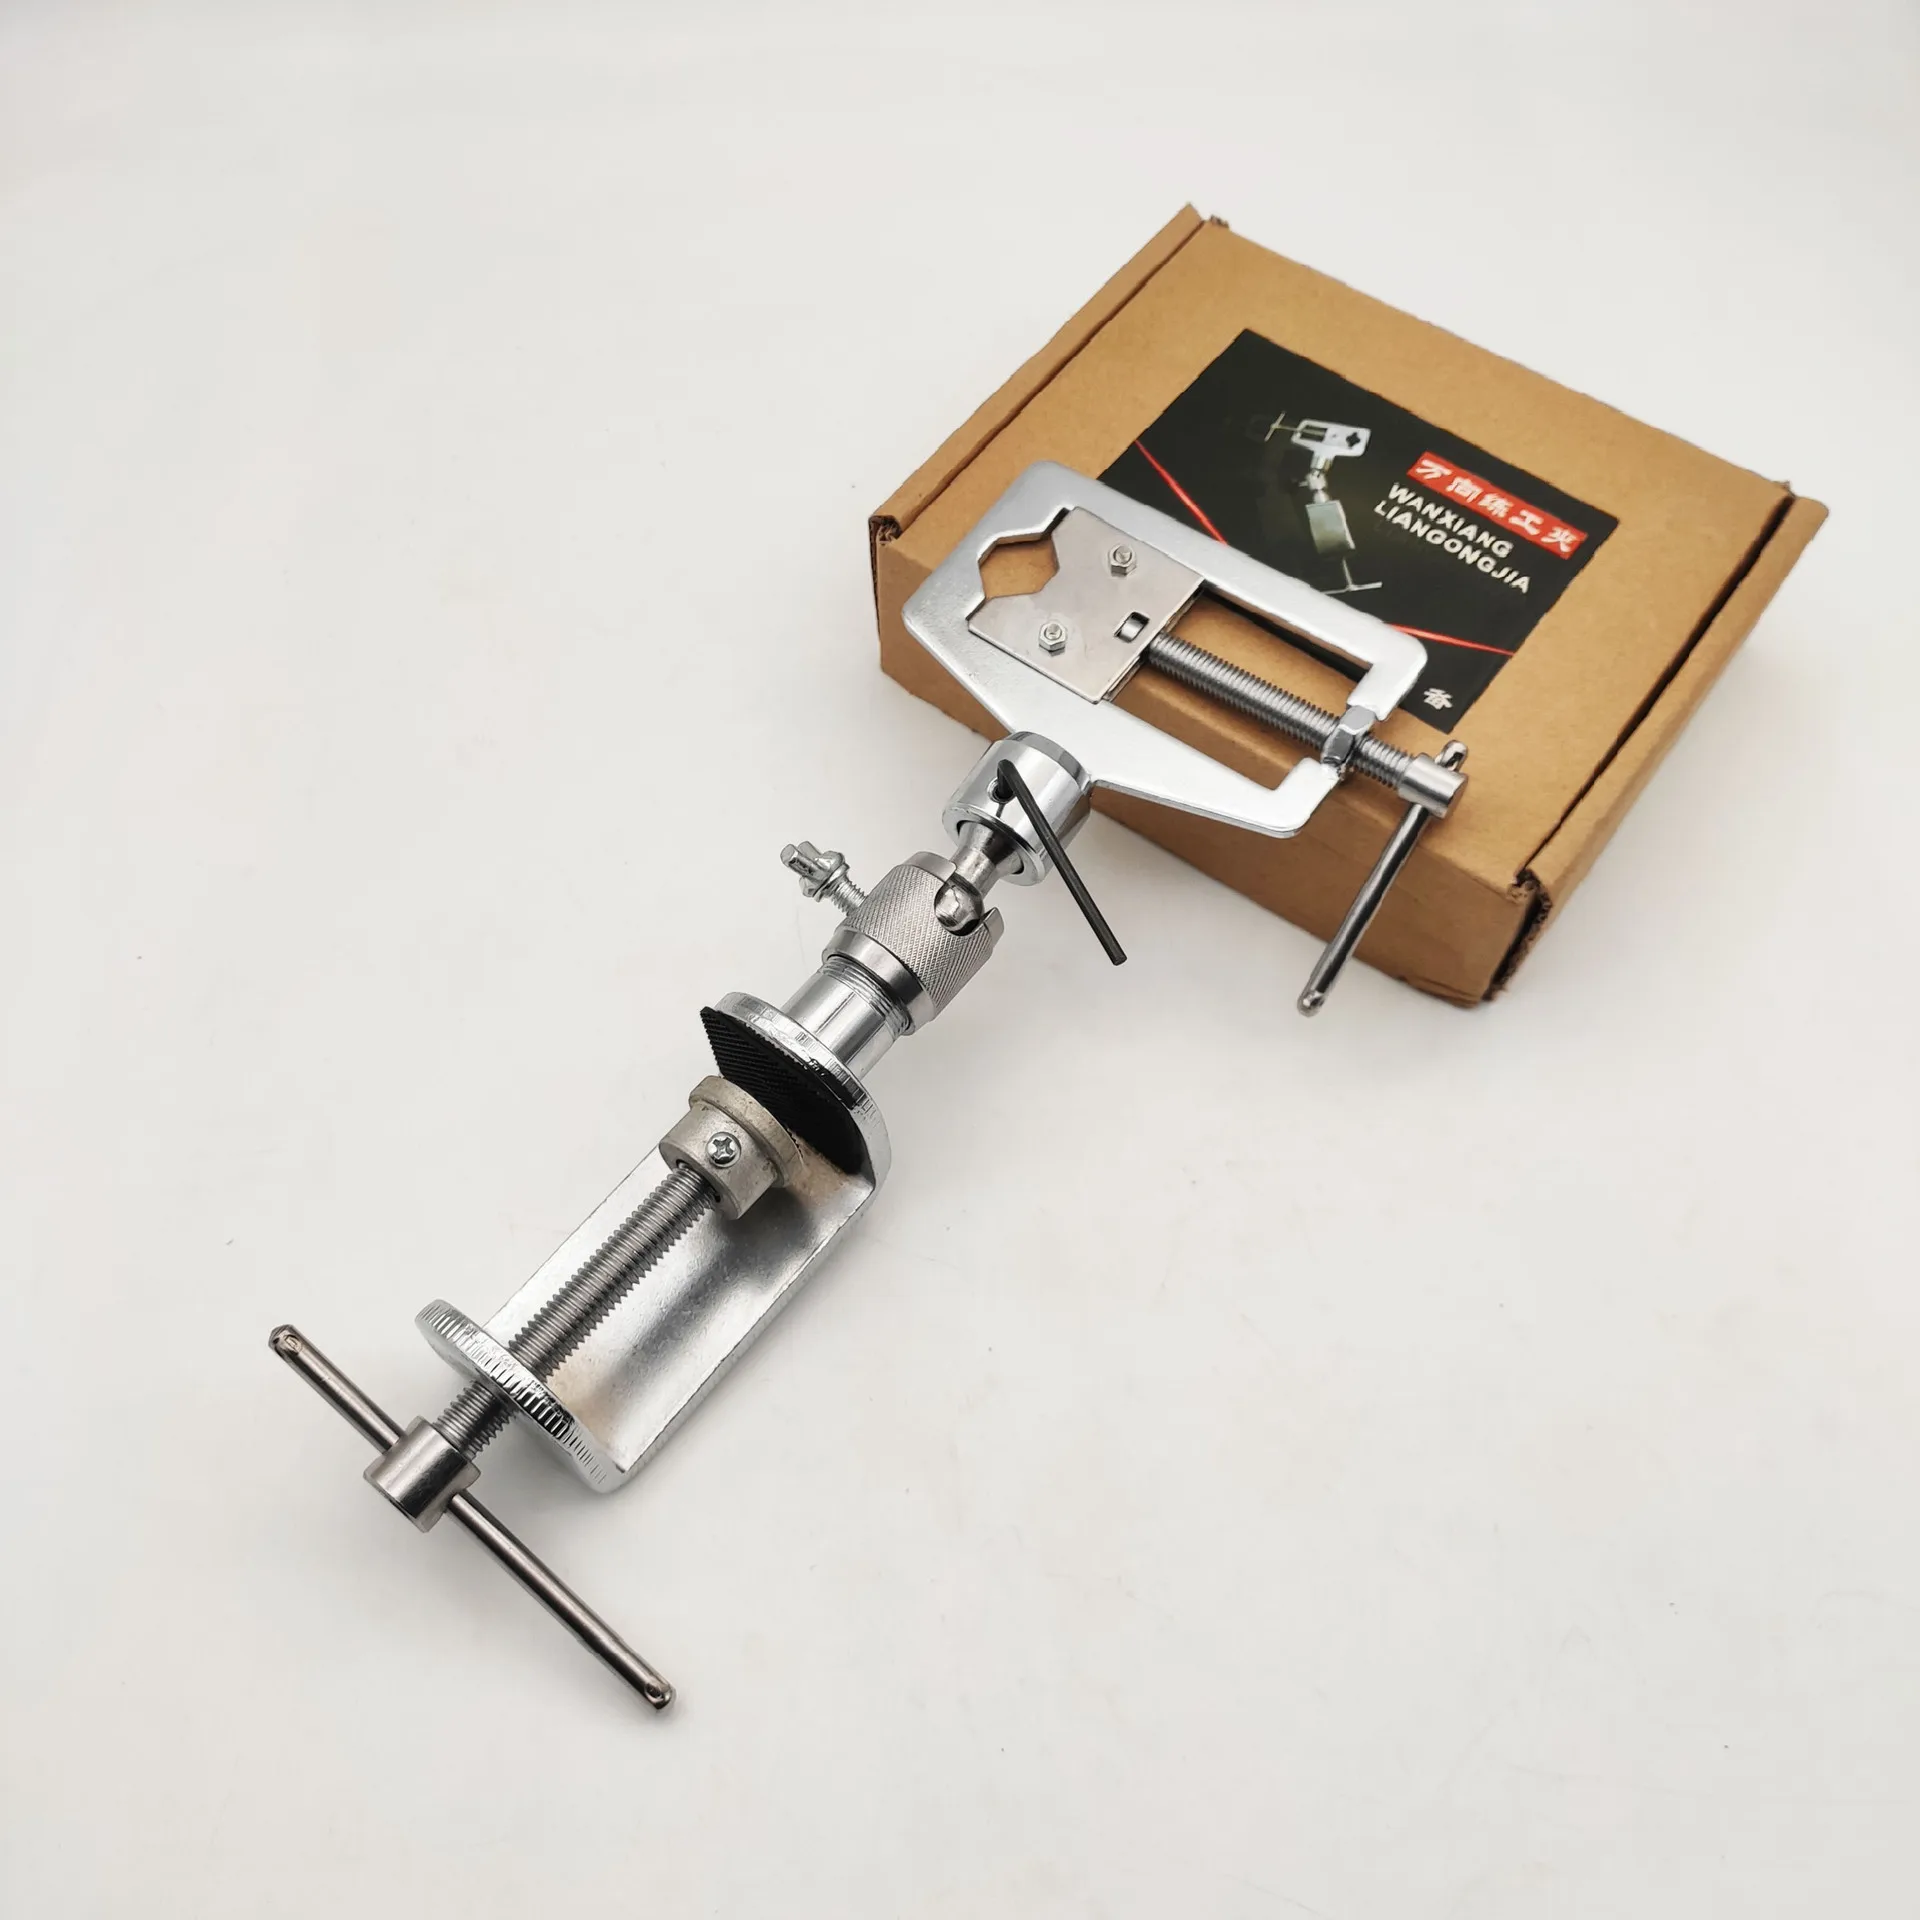 Universal Practice Clamp Locksmith Tools Locksmith Supplies Vise Repair Door Opener Tool Lockpick Lock Picking Set